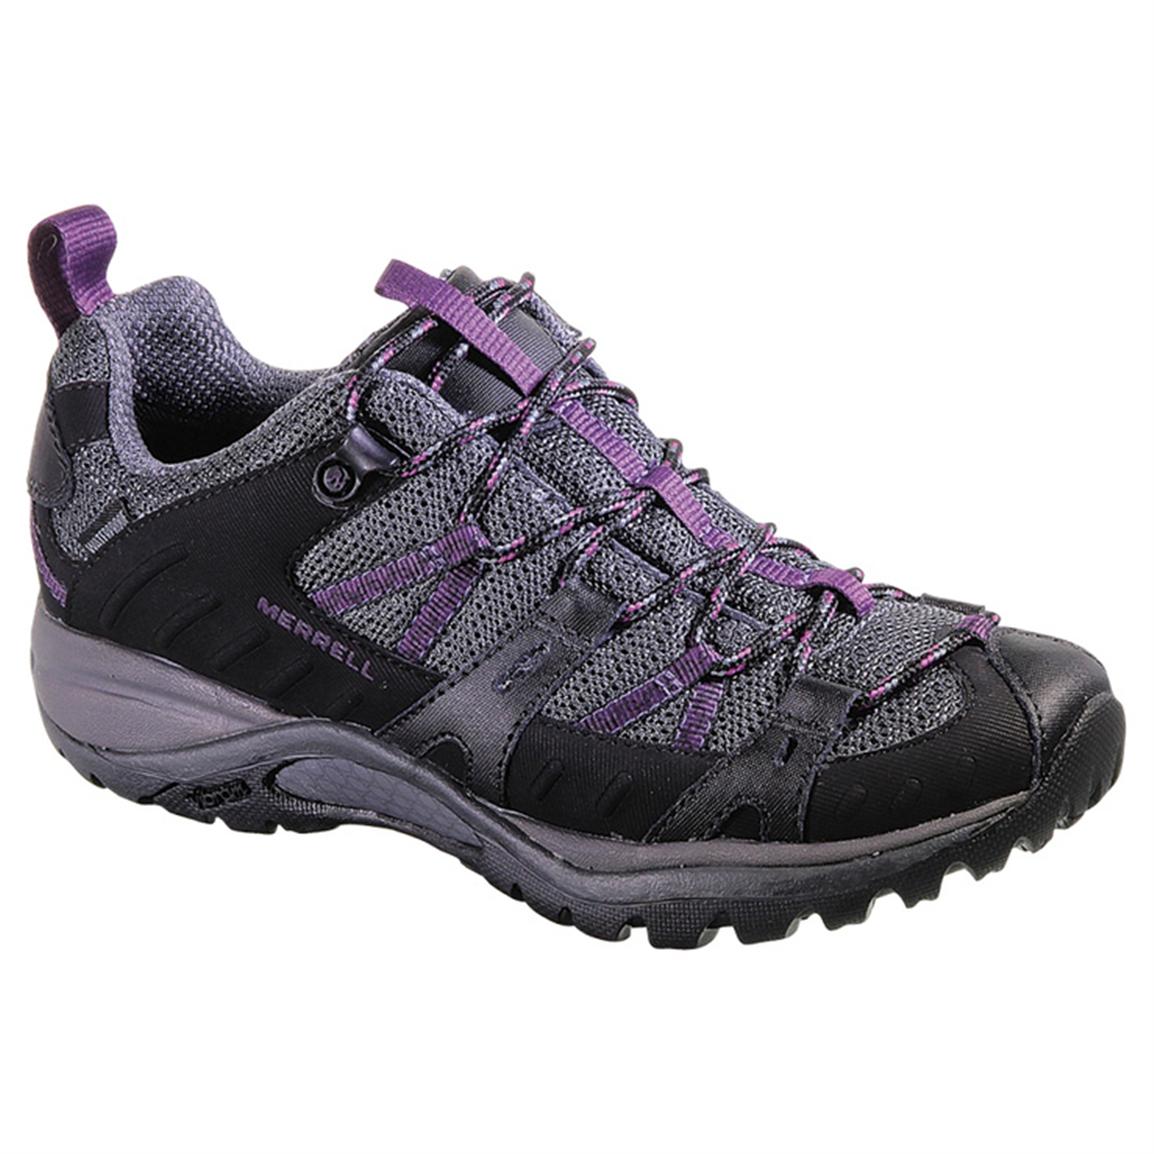 Women's MerrellÂ® Siren Sport 2 Waterproof Hiking Shoes - 583703, Hiking Boots & Shoes at 